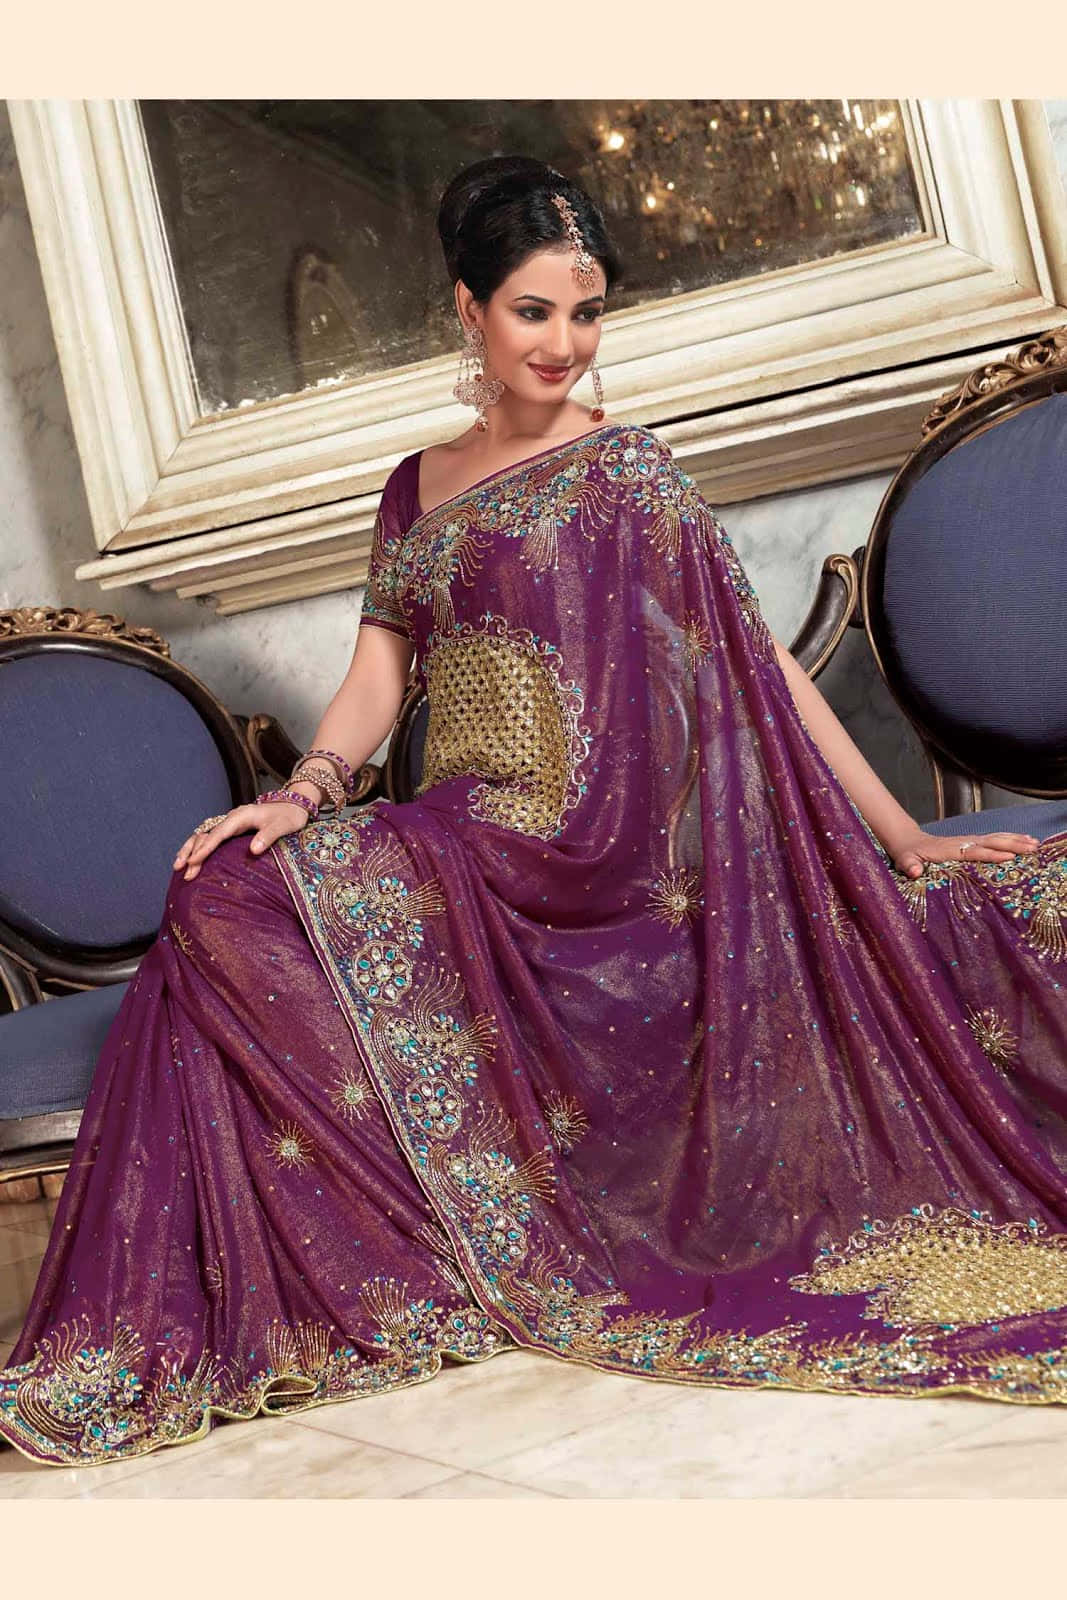 A Woman In A Purple Sari